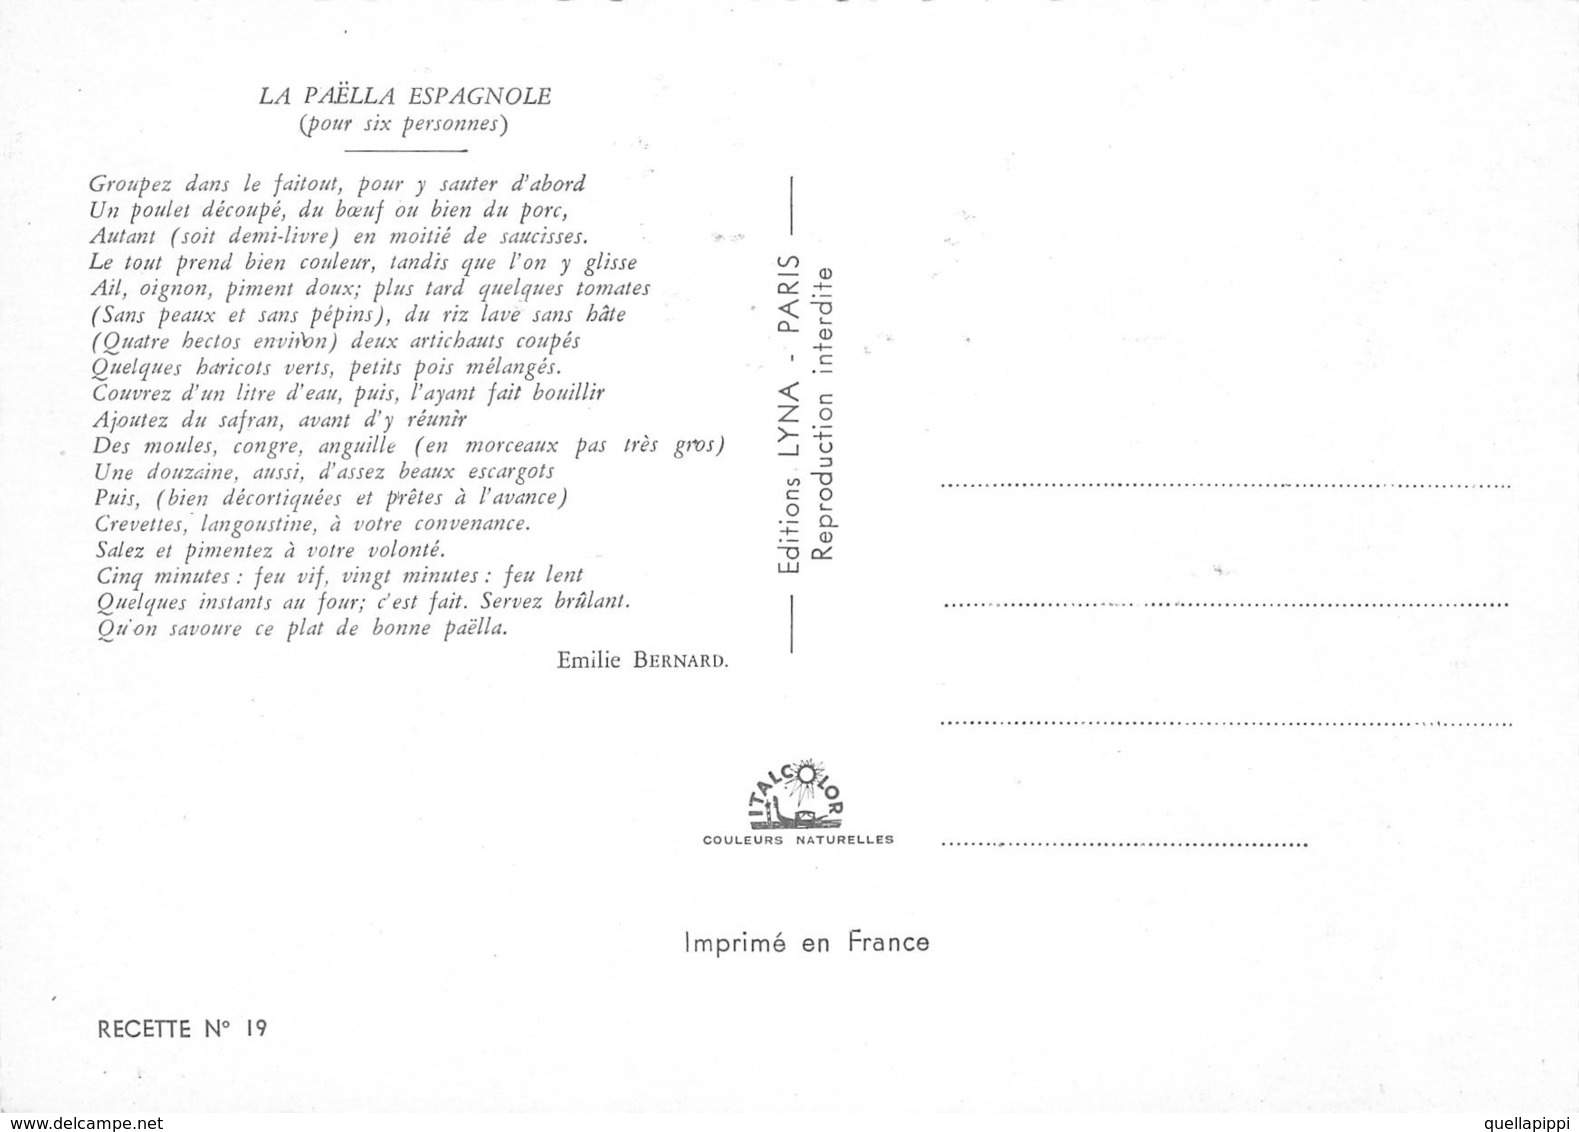 09470 "RECETTE DE LA PAELLA ESPAGNOLE - EMILIE BERNARD"  RICETTA N° 19.  CART NON SPED - Ricette Di Cucina